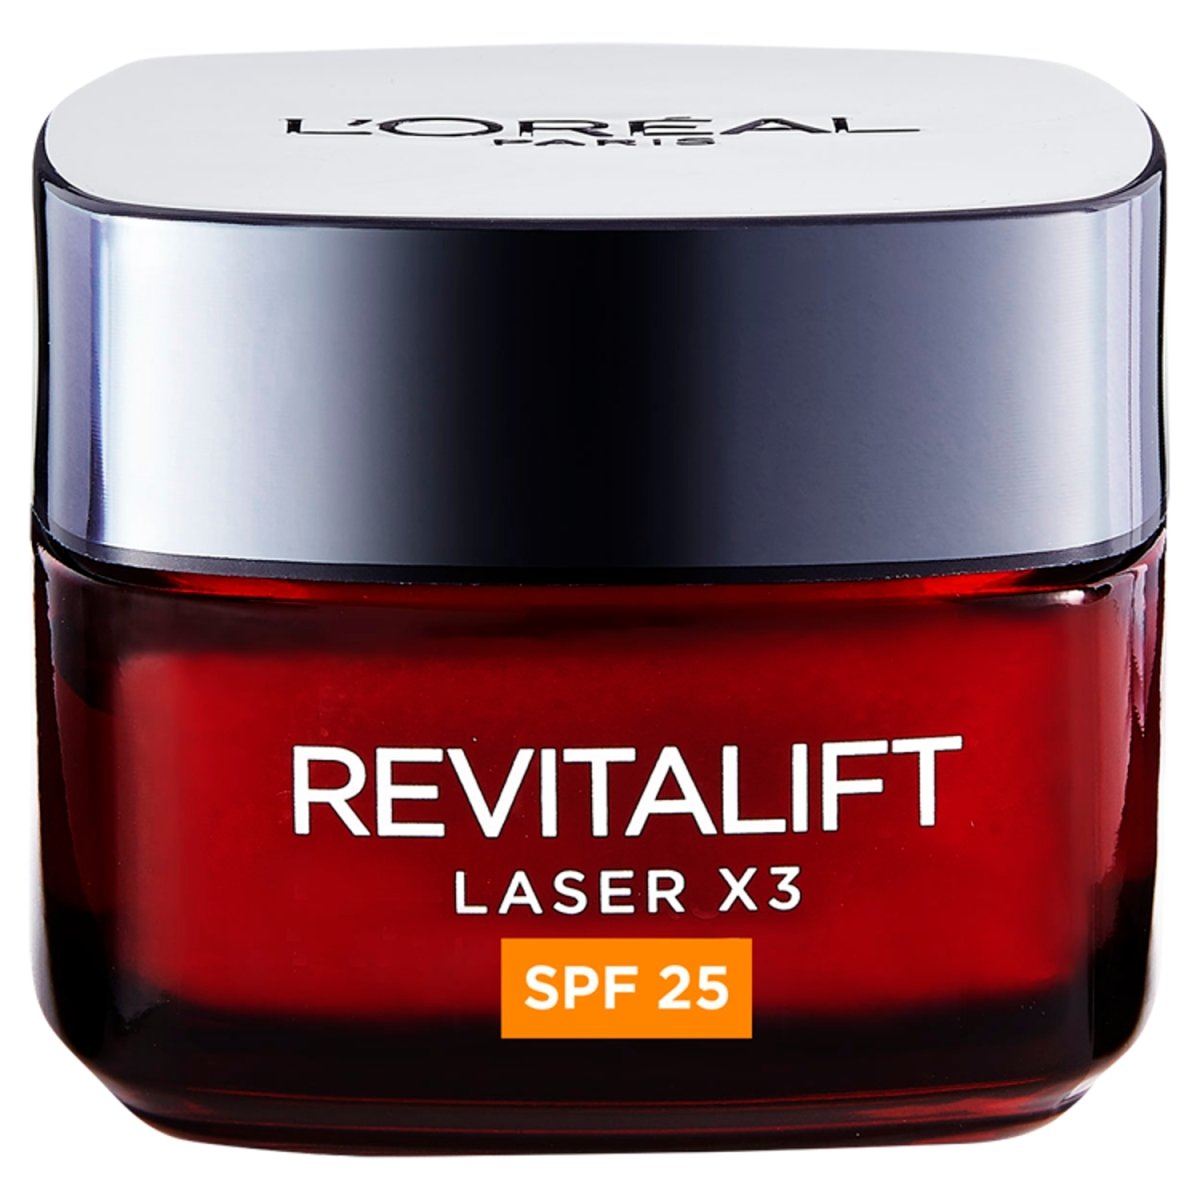 L'Oreal Revitalift Laser Renew Day Cream SPF 20 50ml - Intamarque 3600523448746